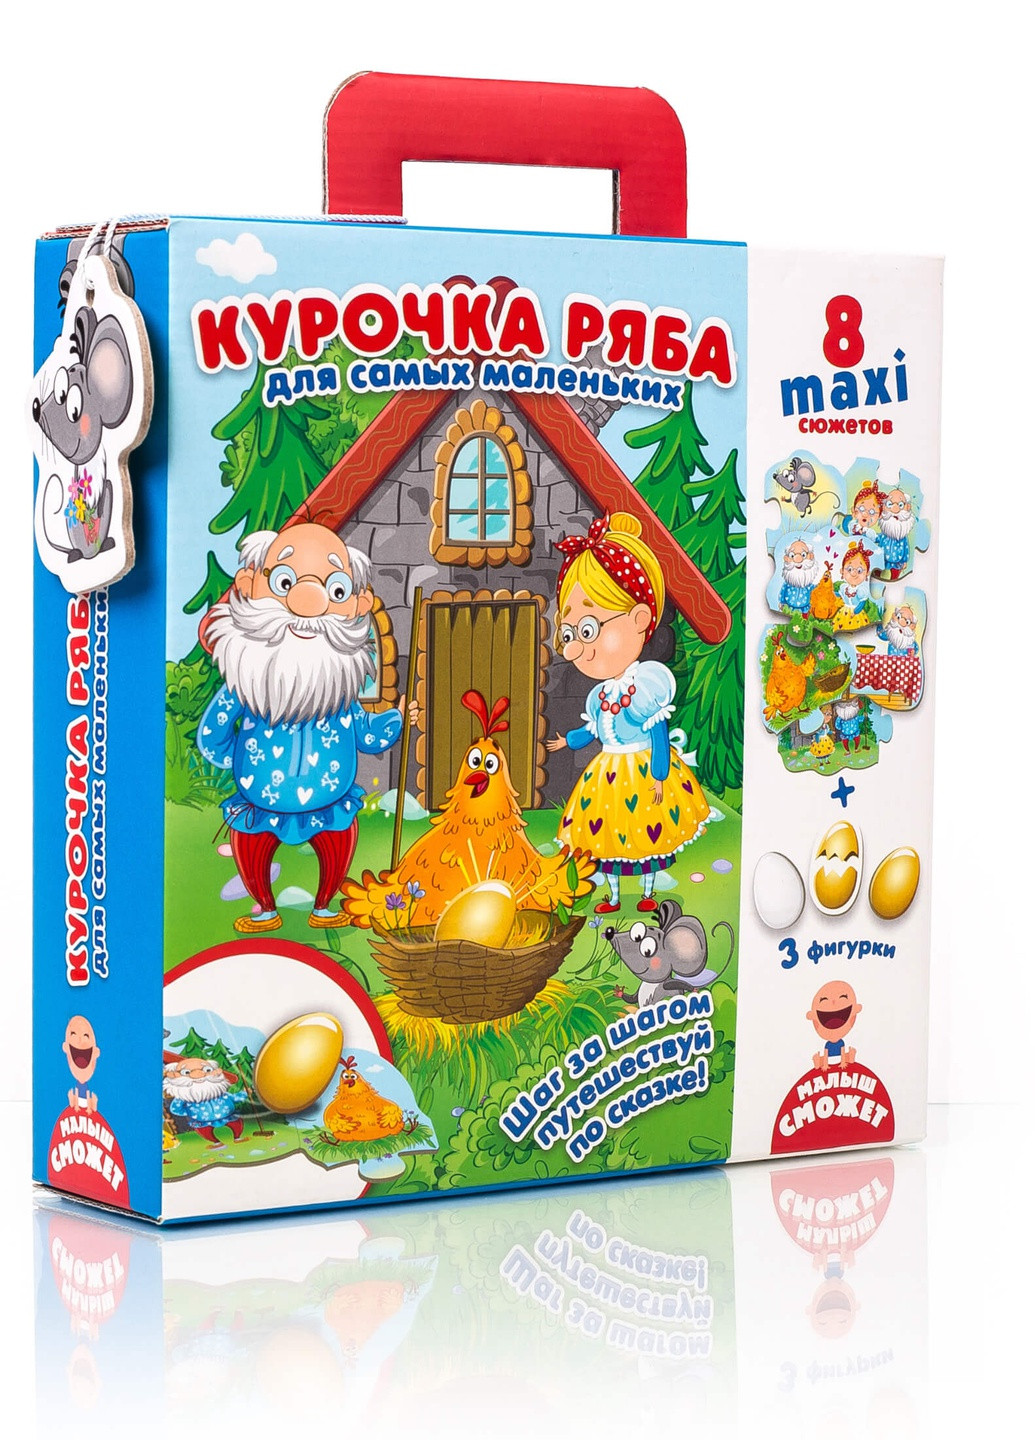 Макси пазлы "Курочка Ряба" для самых маленьких VT2909-12 (рус) Vladi toys (232668298)